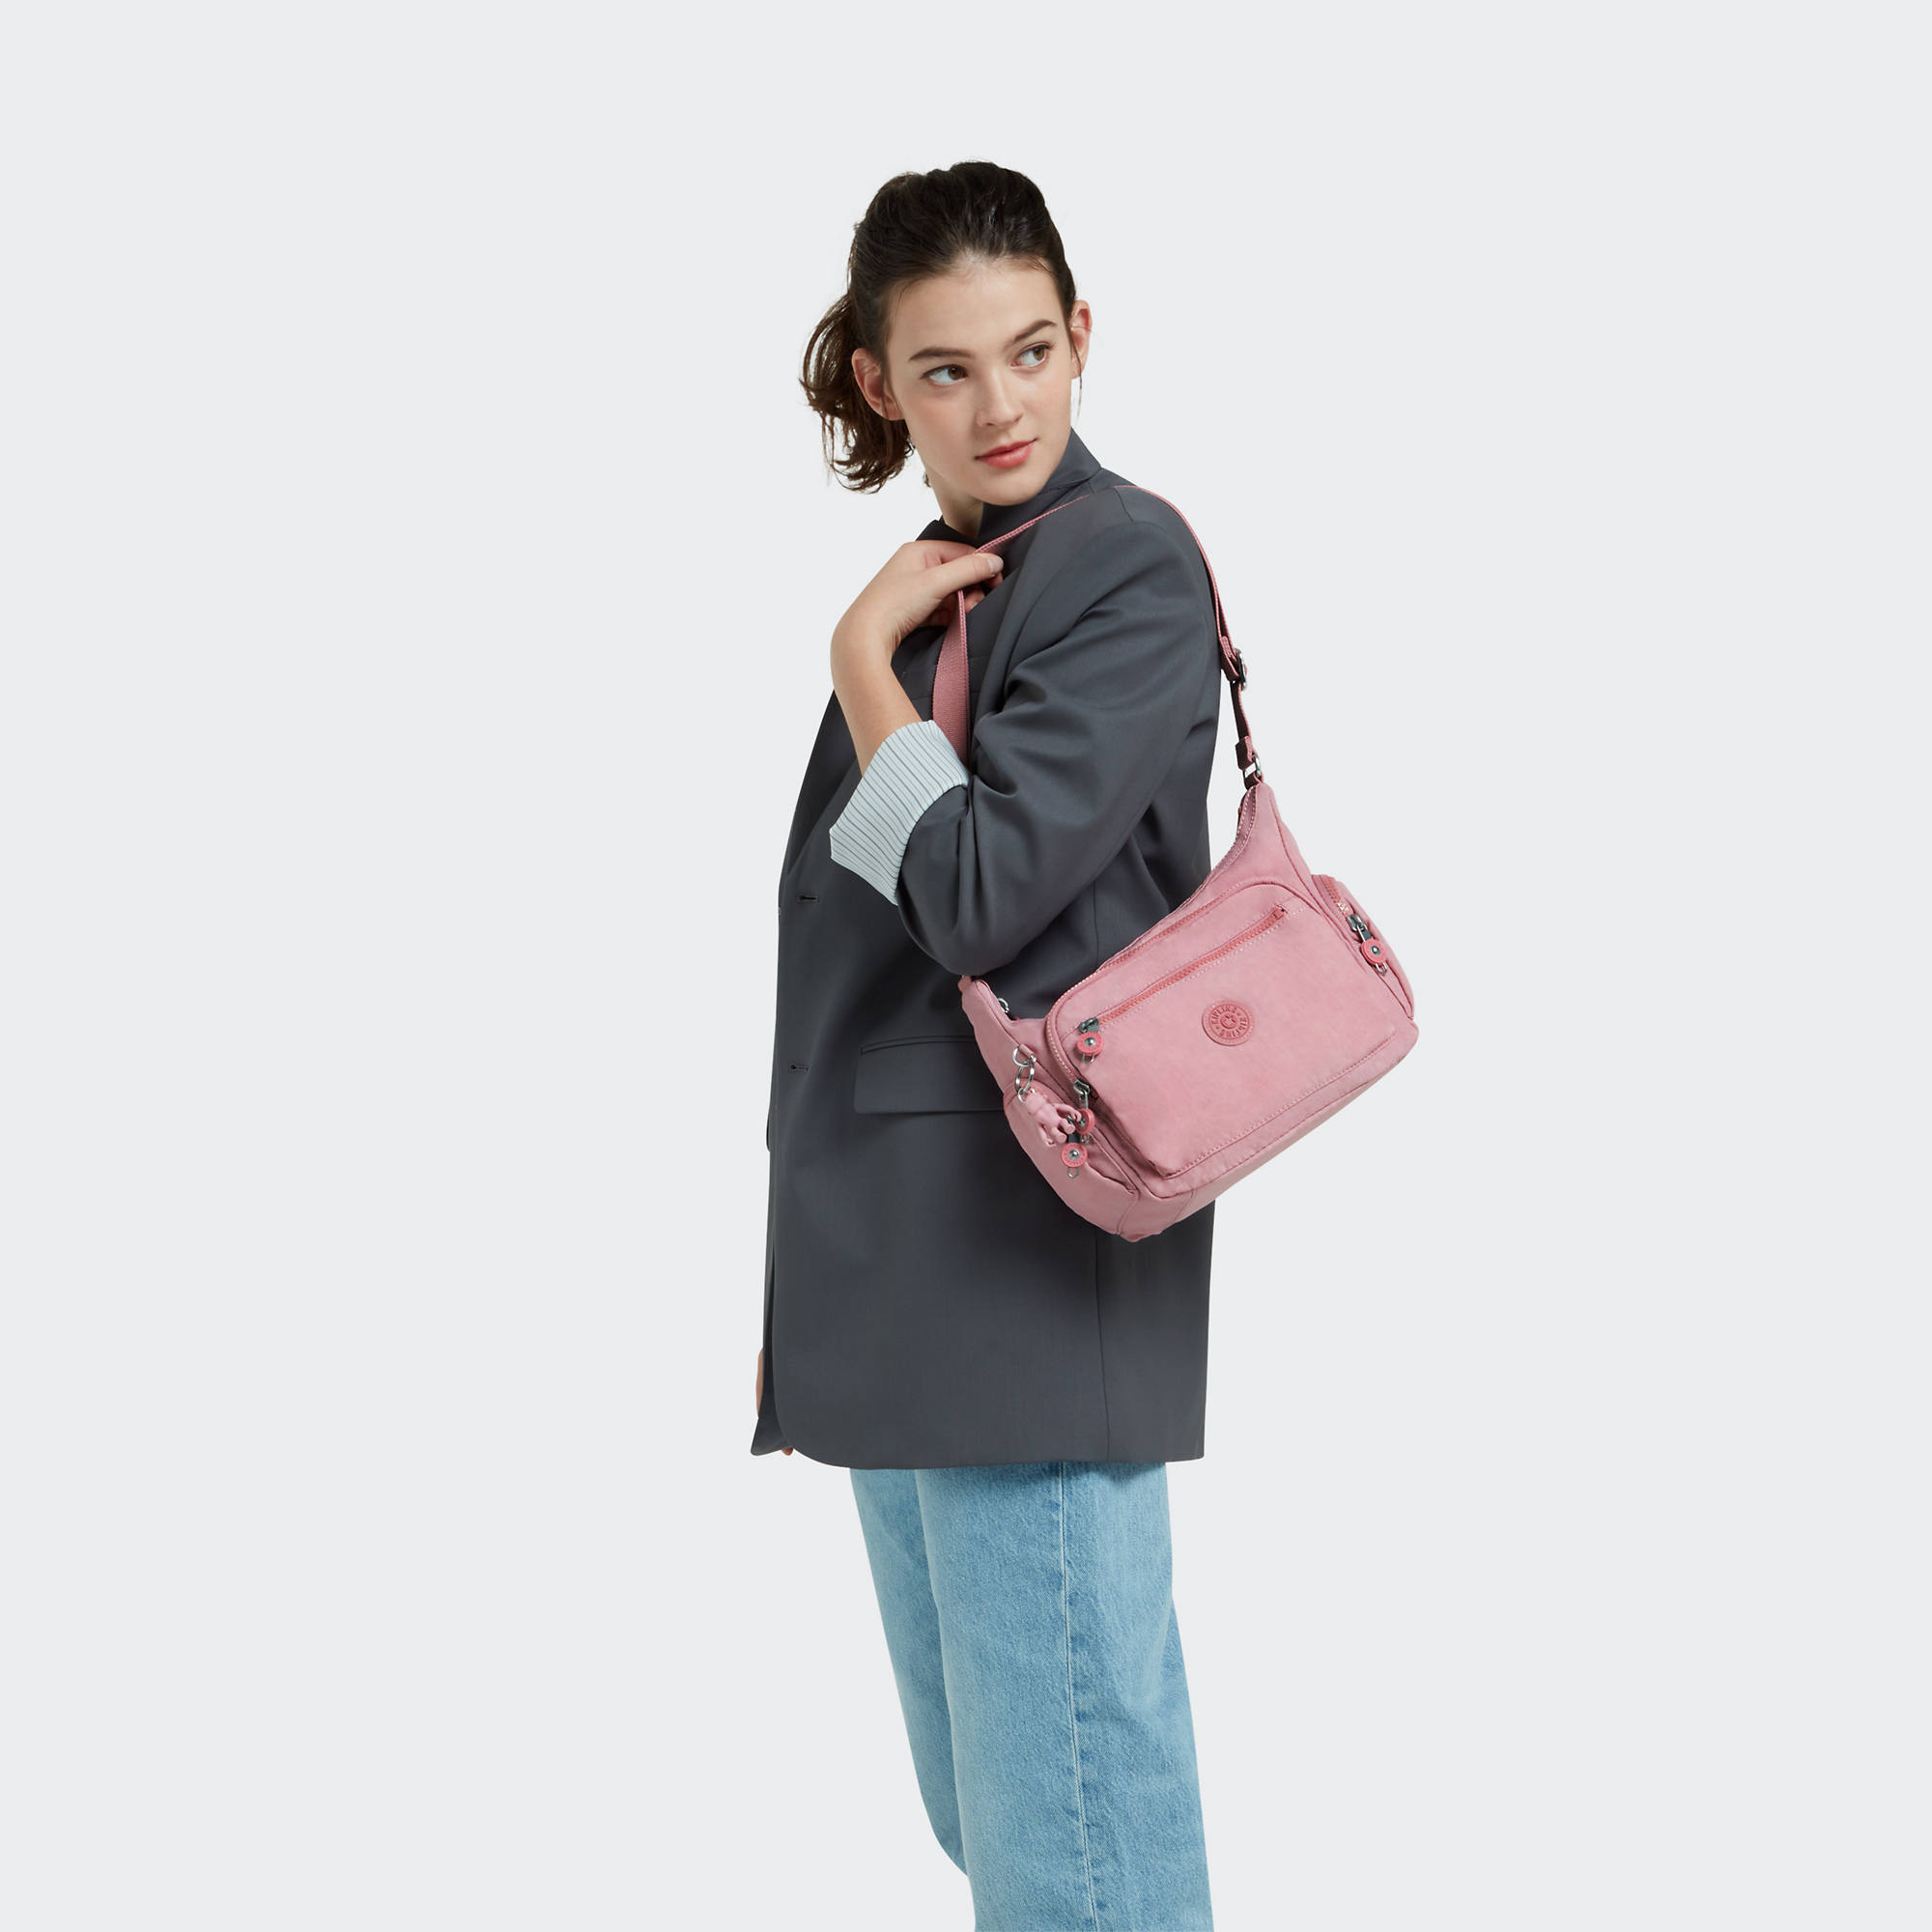 Kipling Women's Gabbie Small Crossbody Handbag with Adjustable Strap | eBay